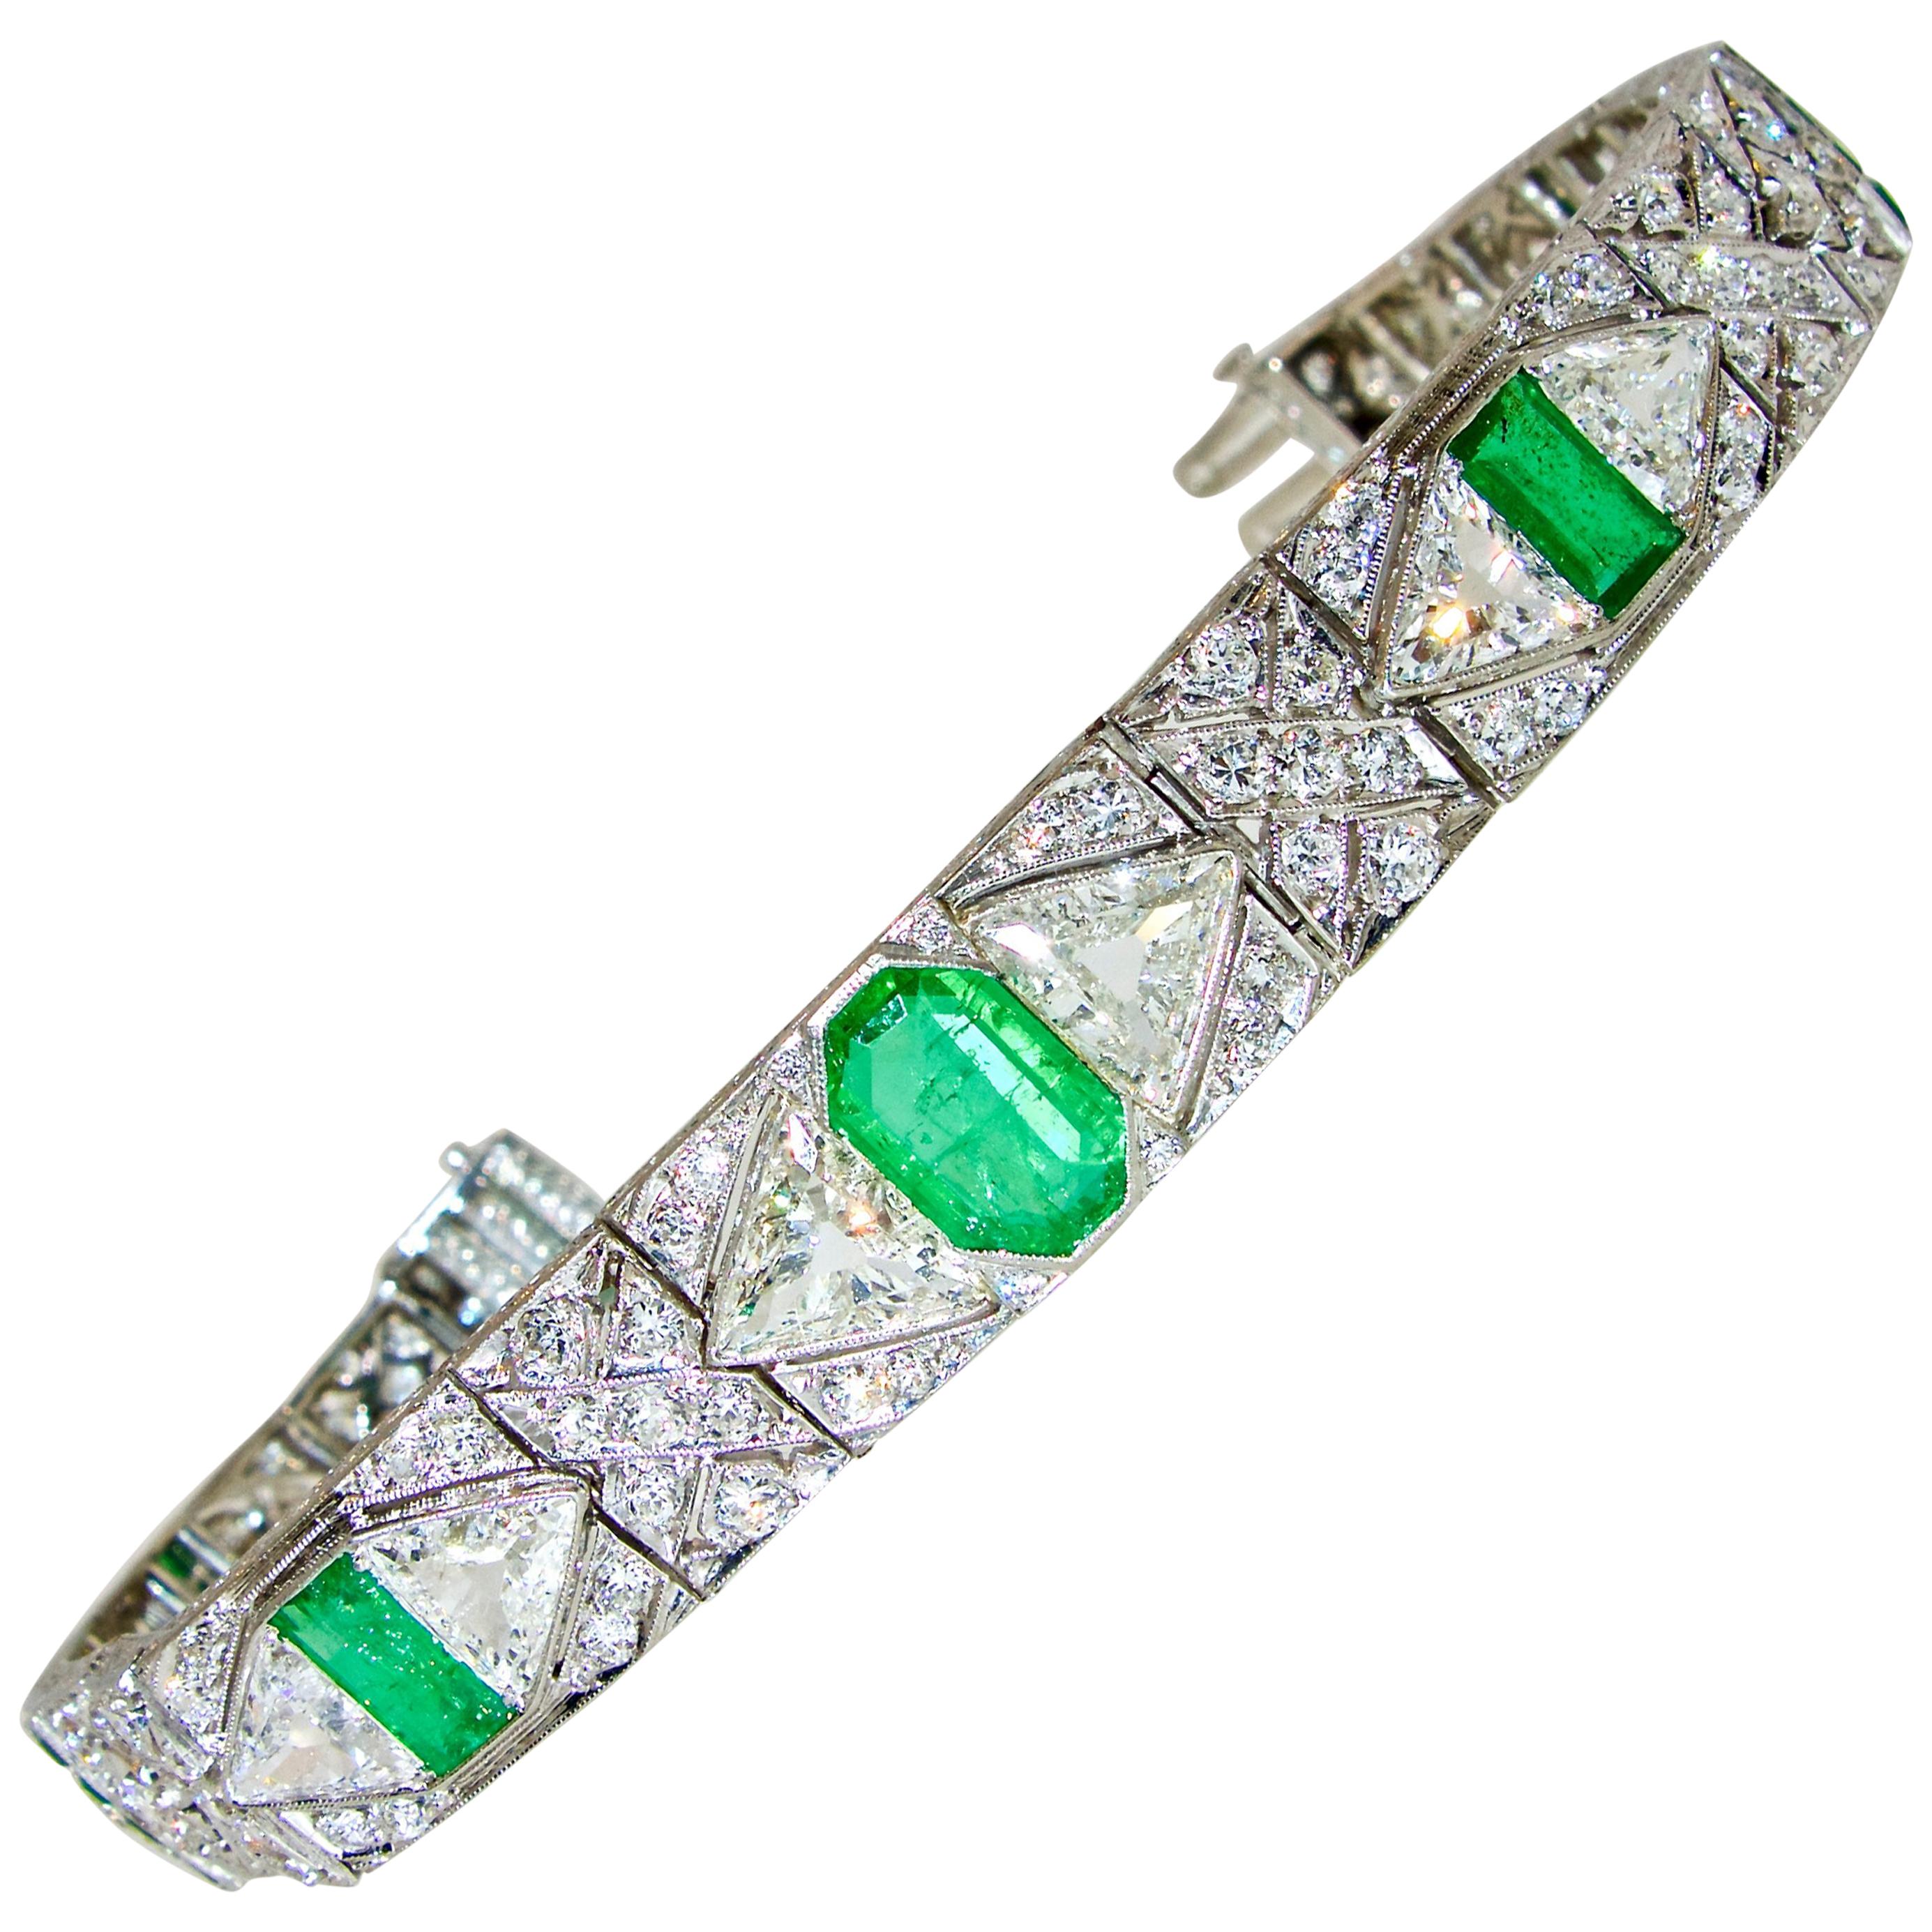 Art Deco Diamond and Emerald Bracelet by E. M. Gattle, circa 1920